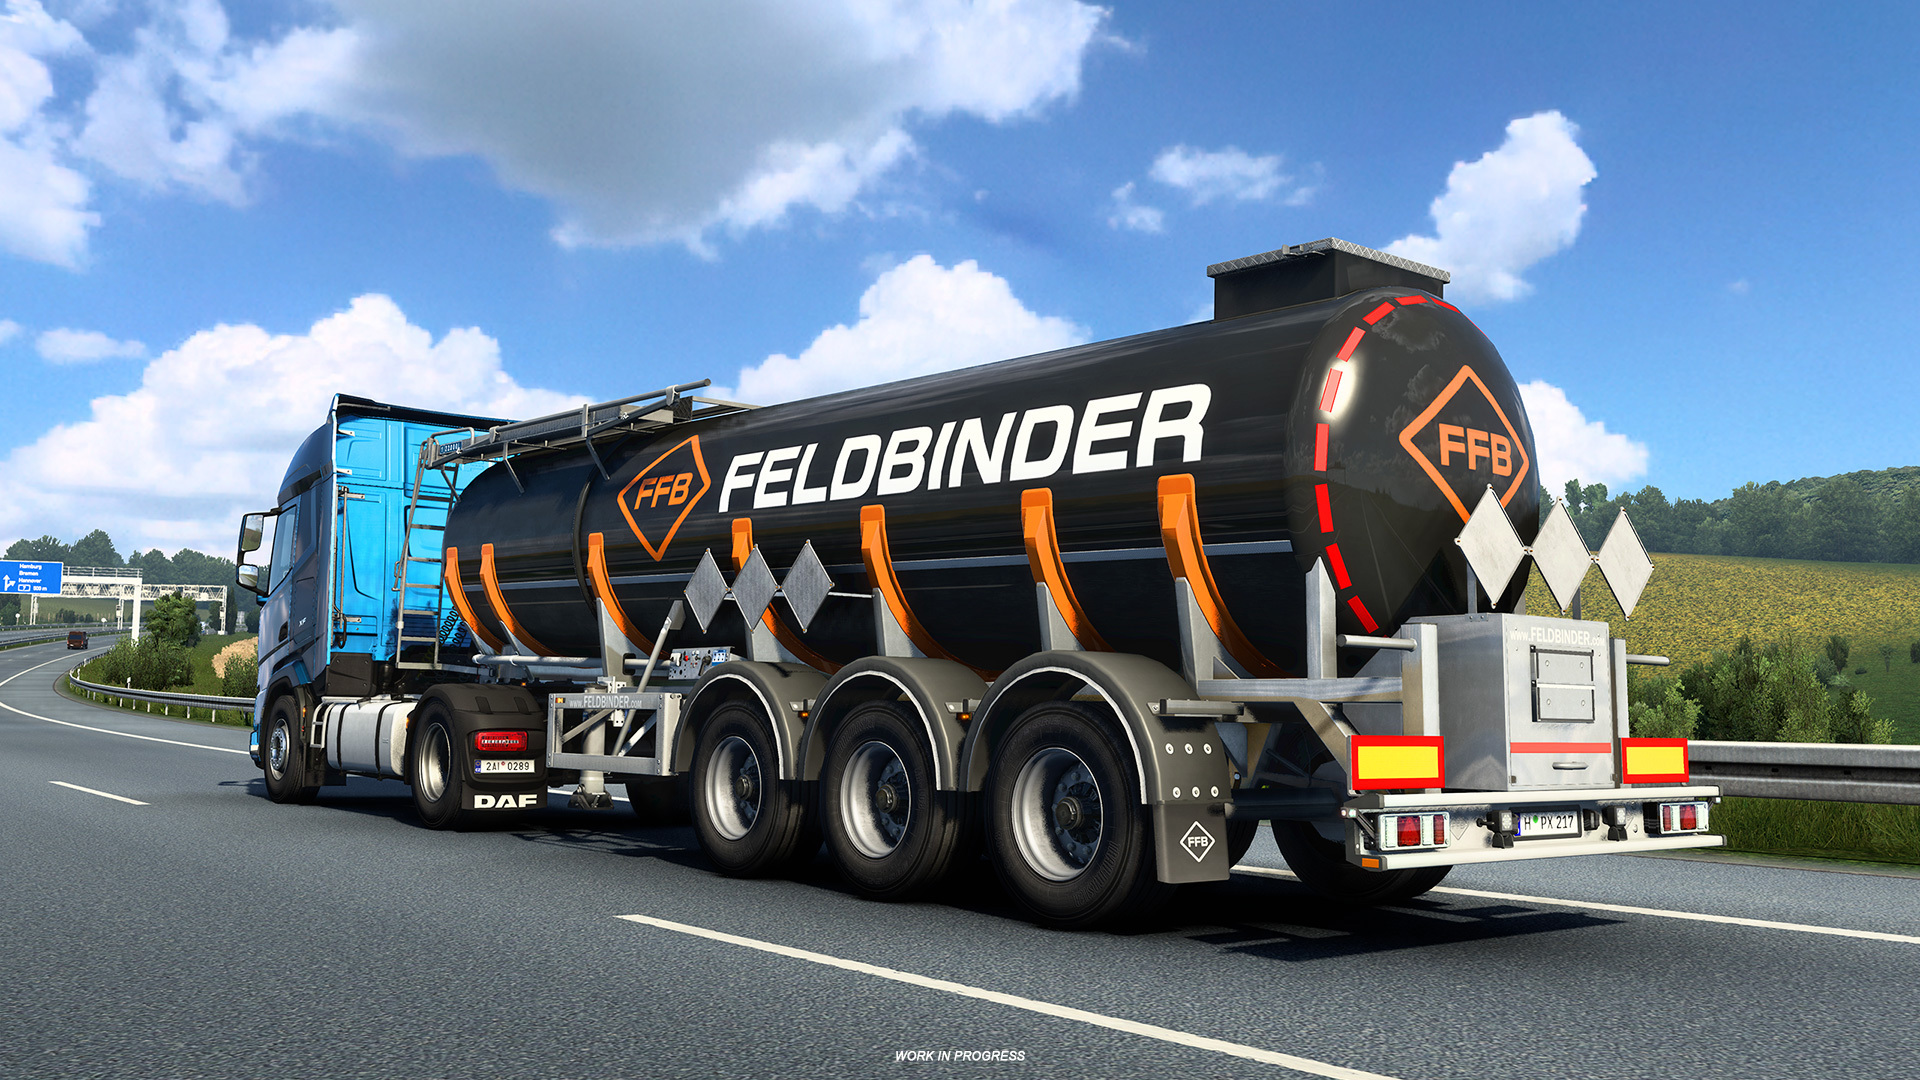 Euro Truck Simulator 2 partners with iconic Feldbinder brand in latest DLC